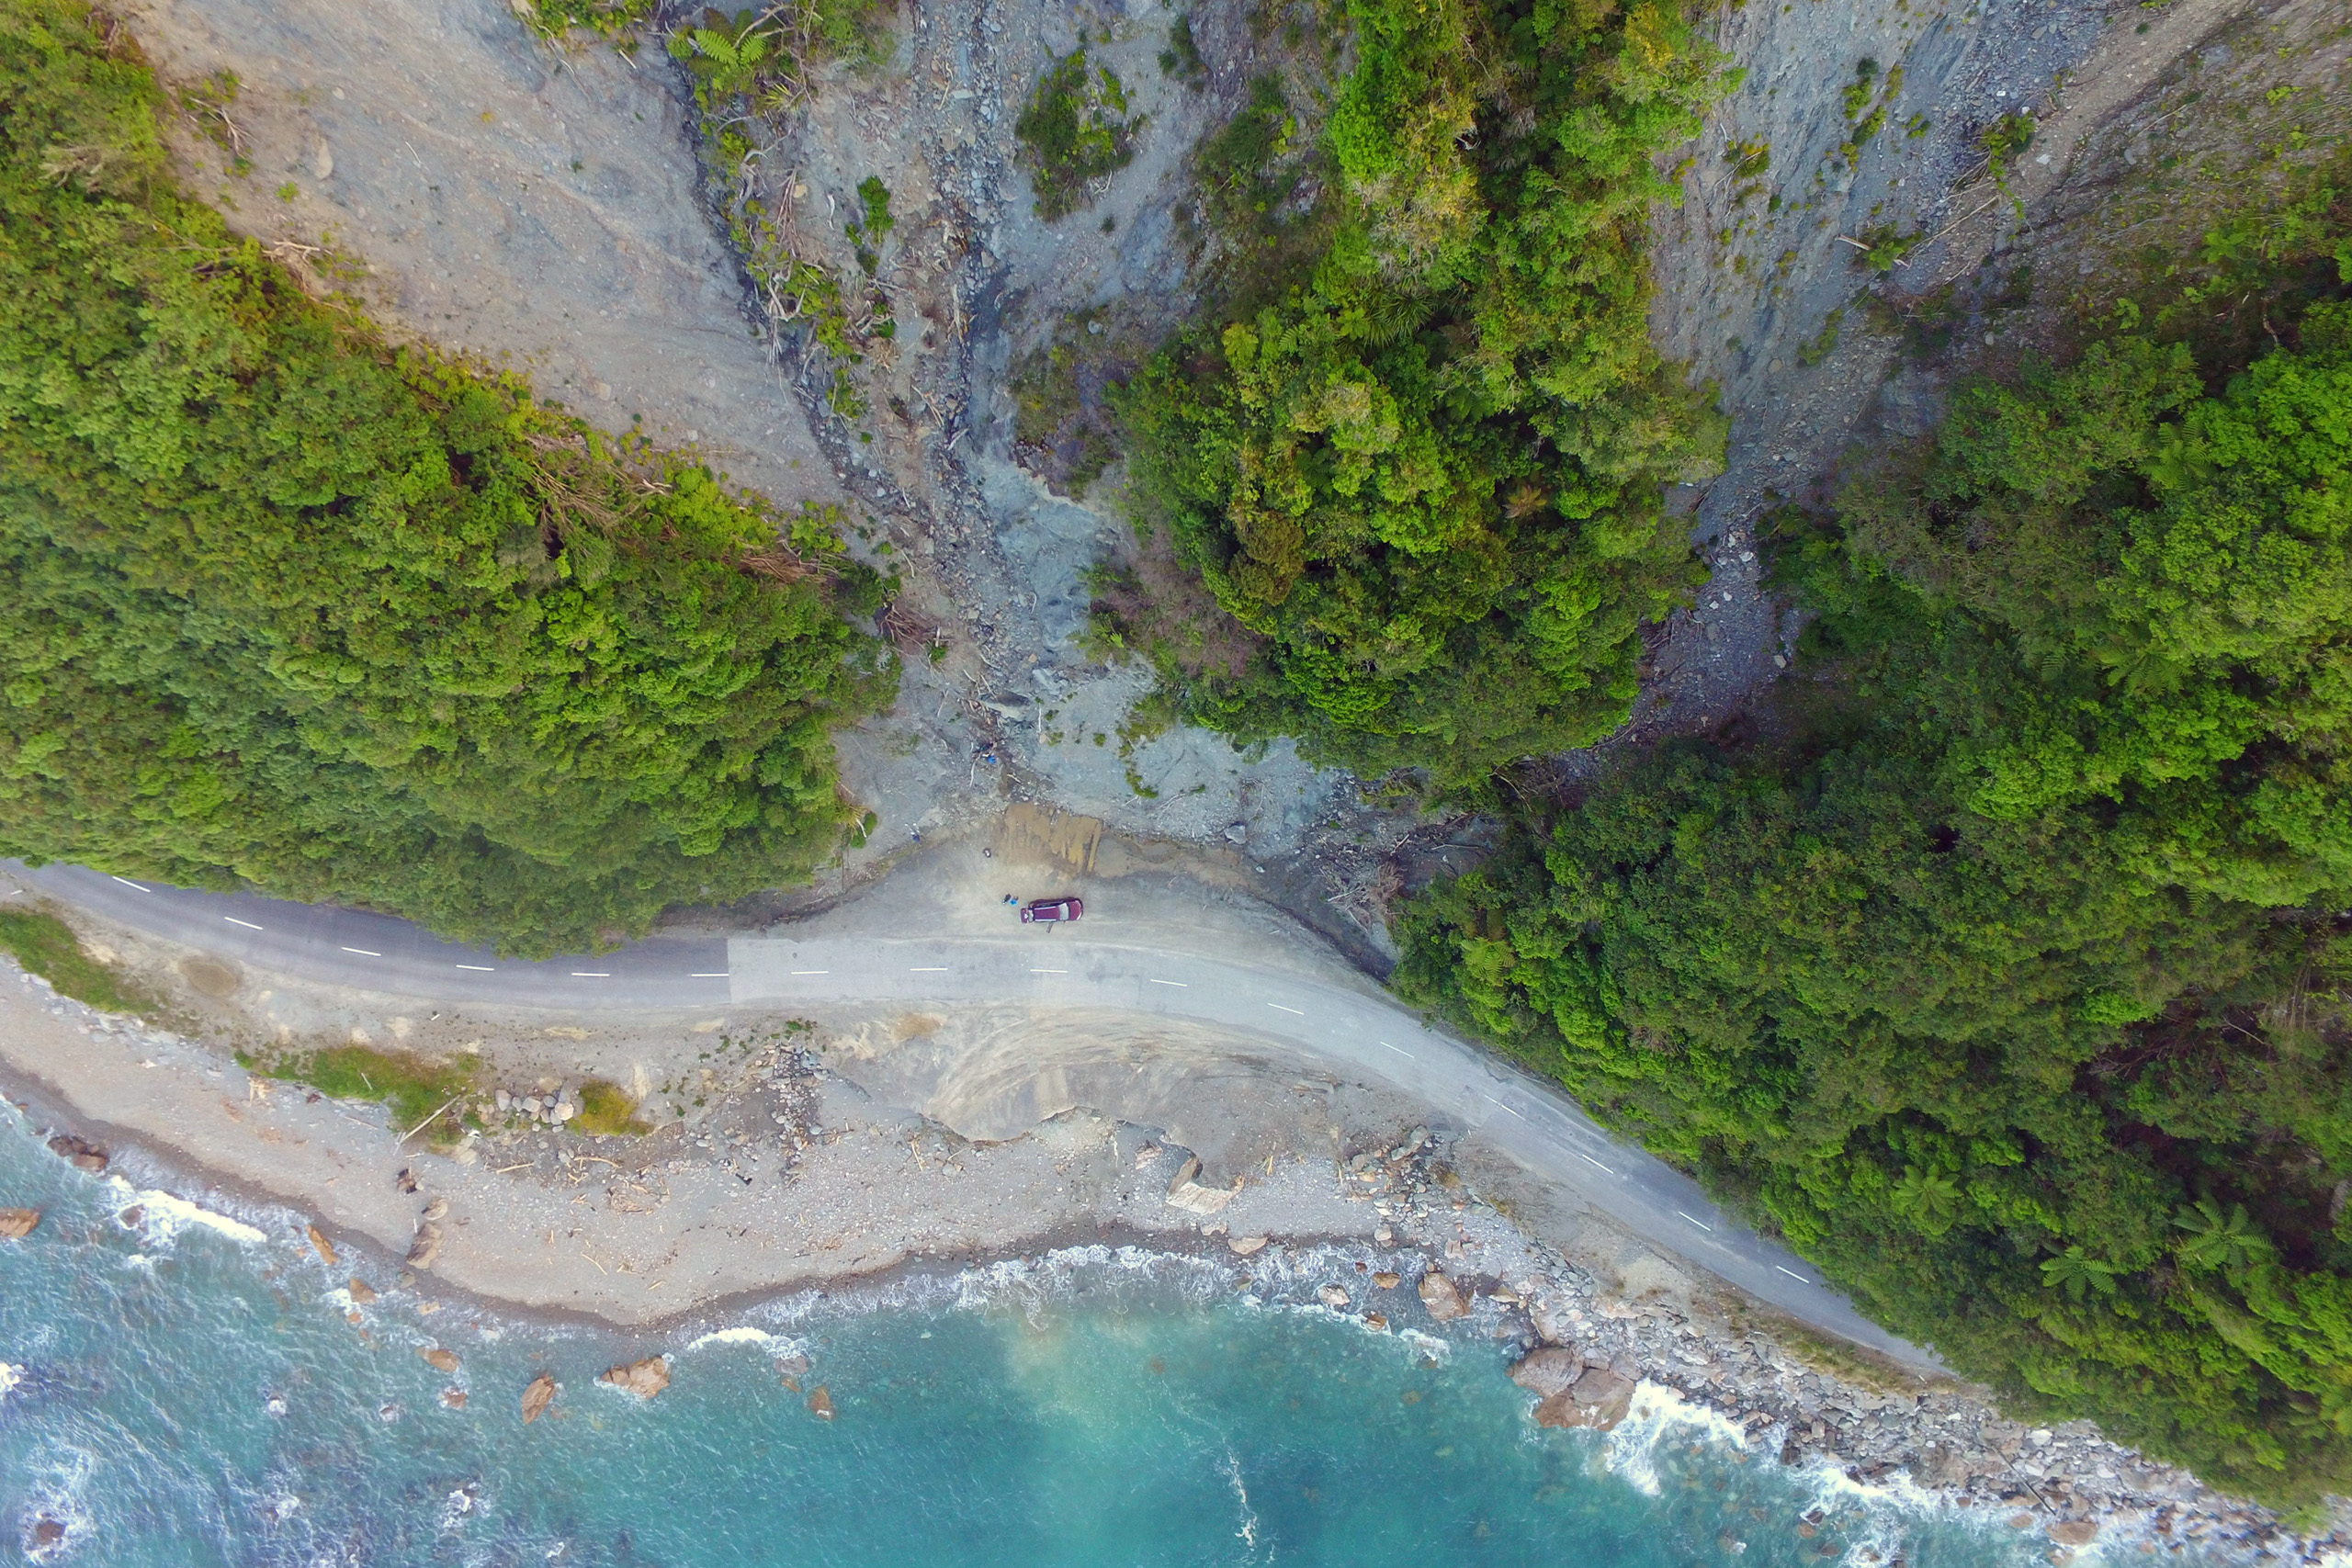 Enlarged view: Drone image of a landslide